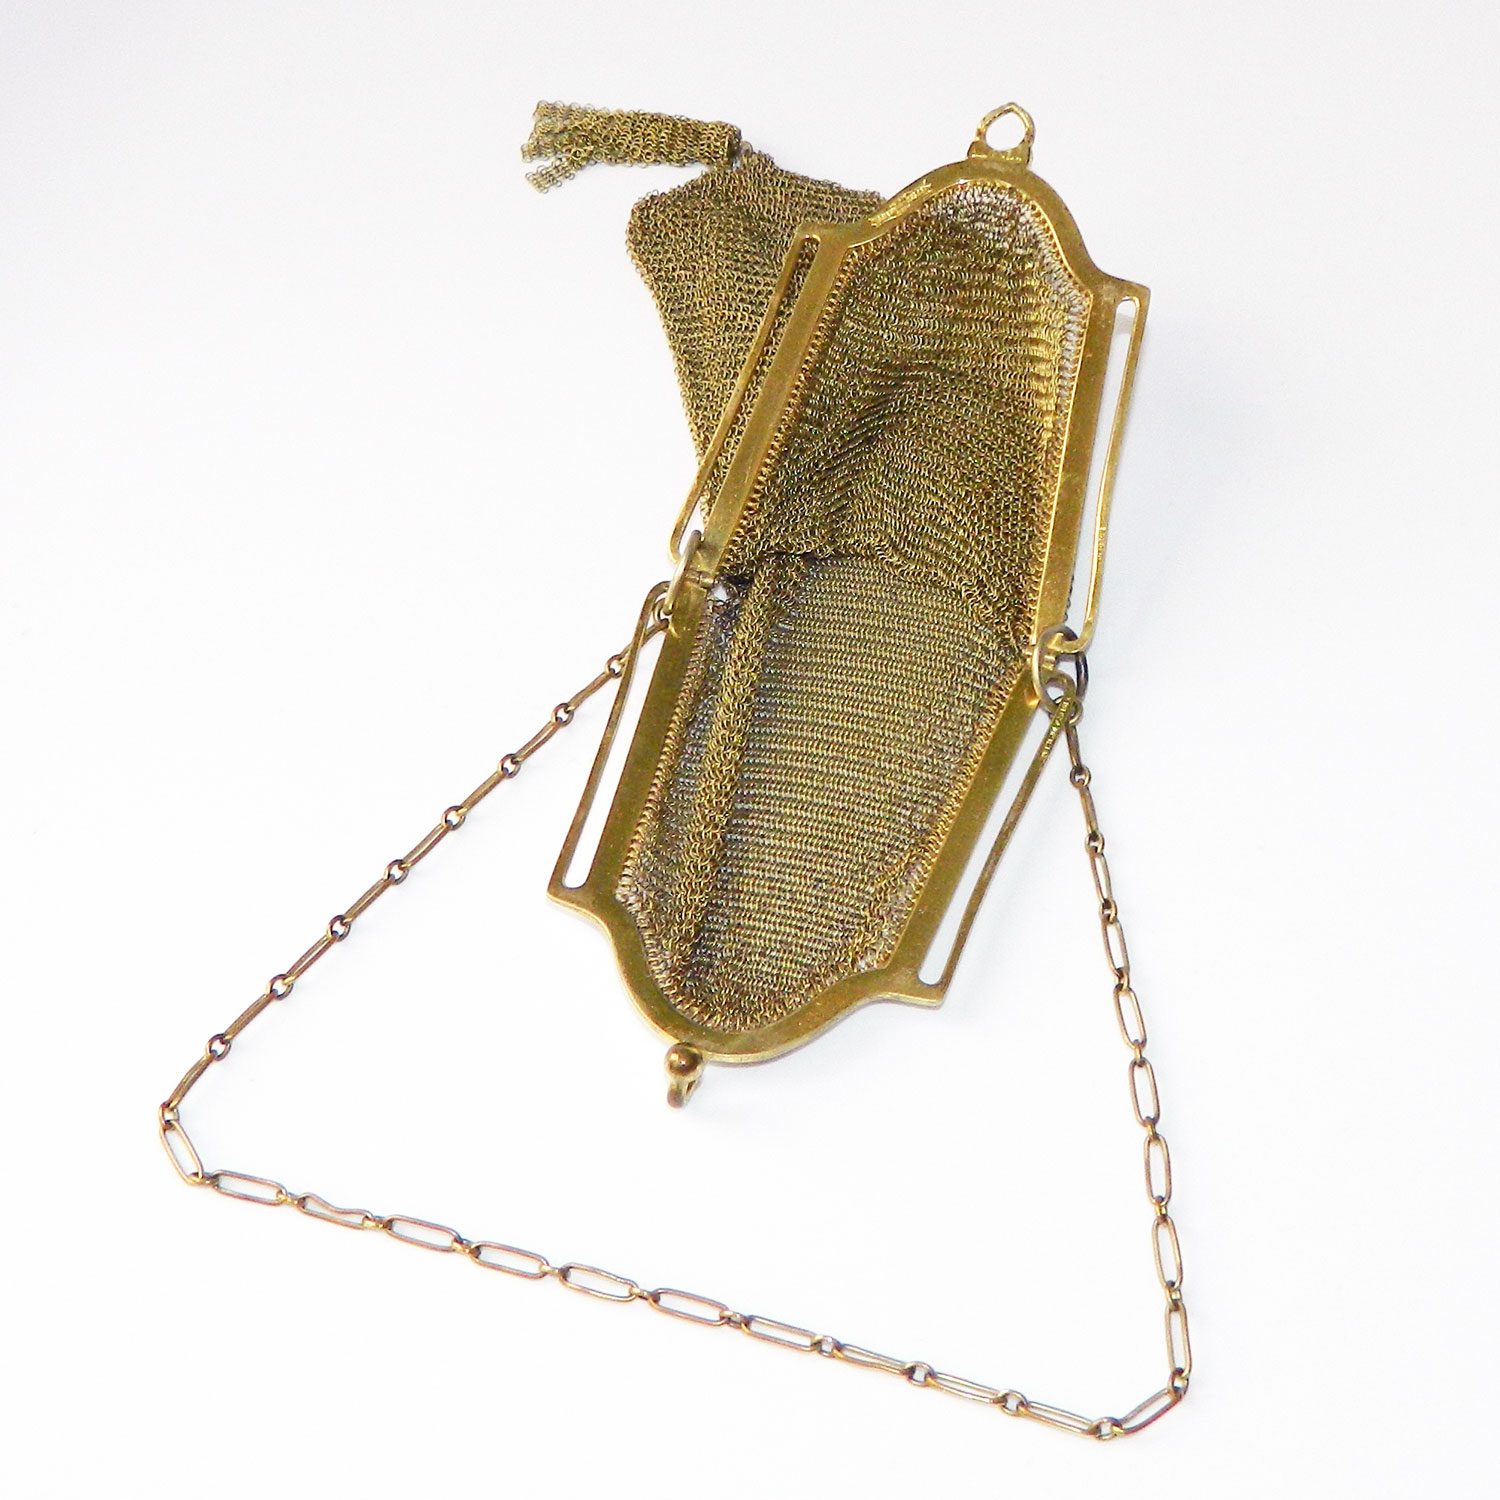 Antique Whiting and Davis mesh handbag